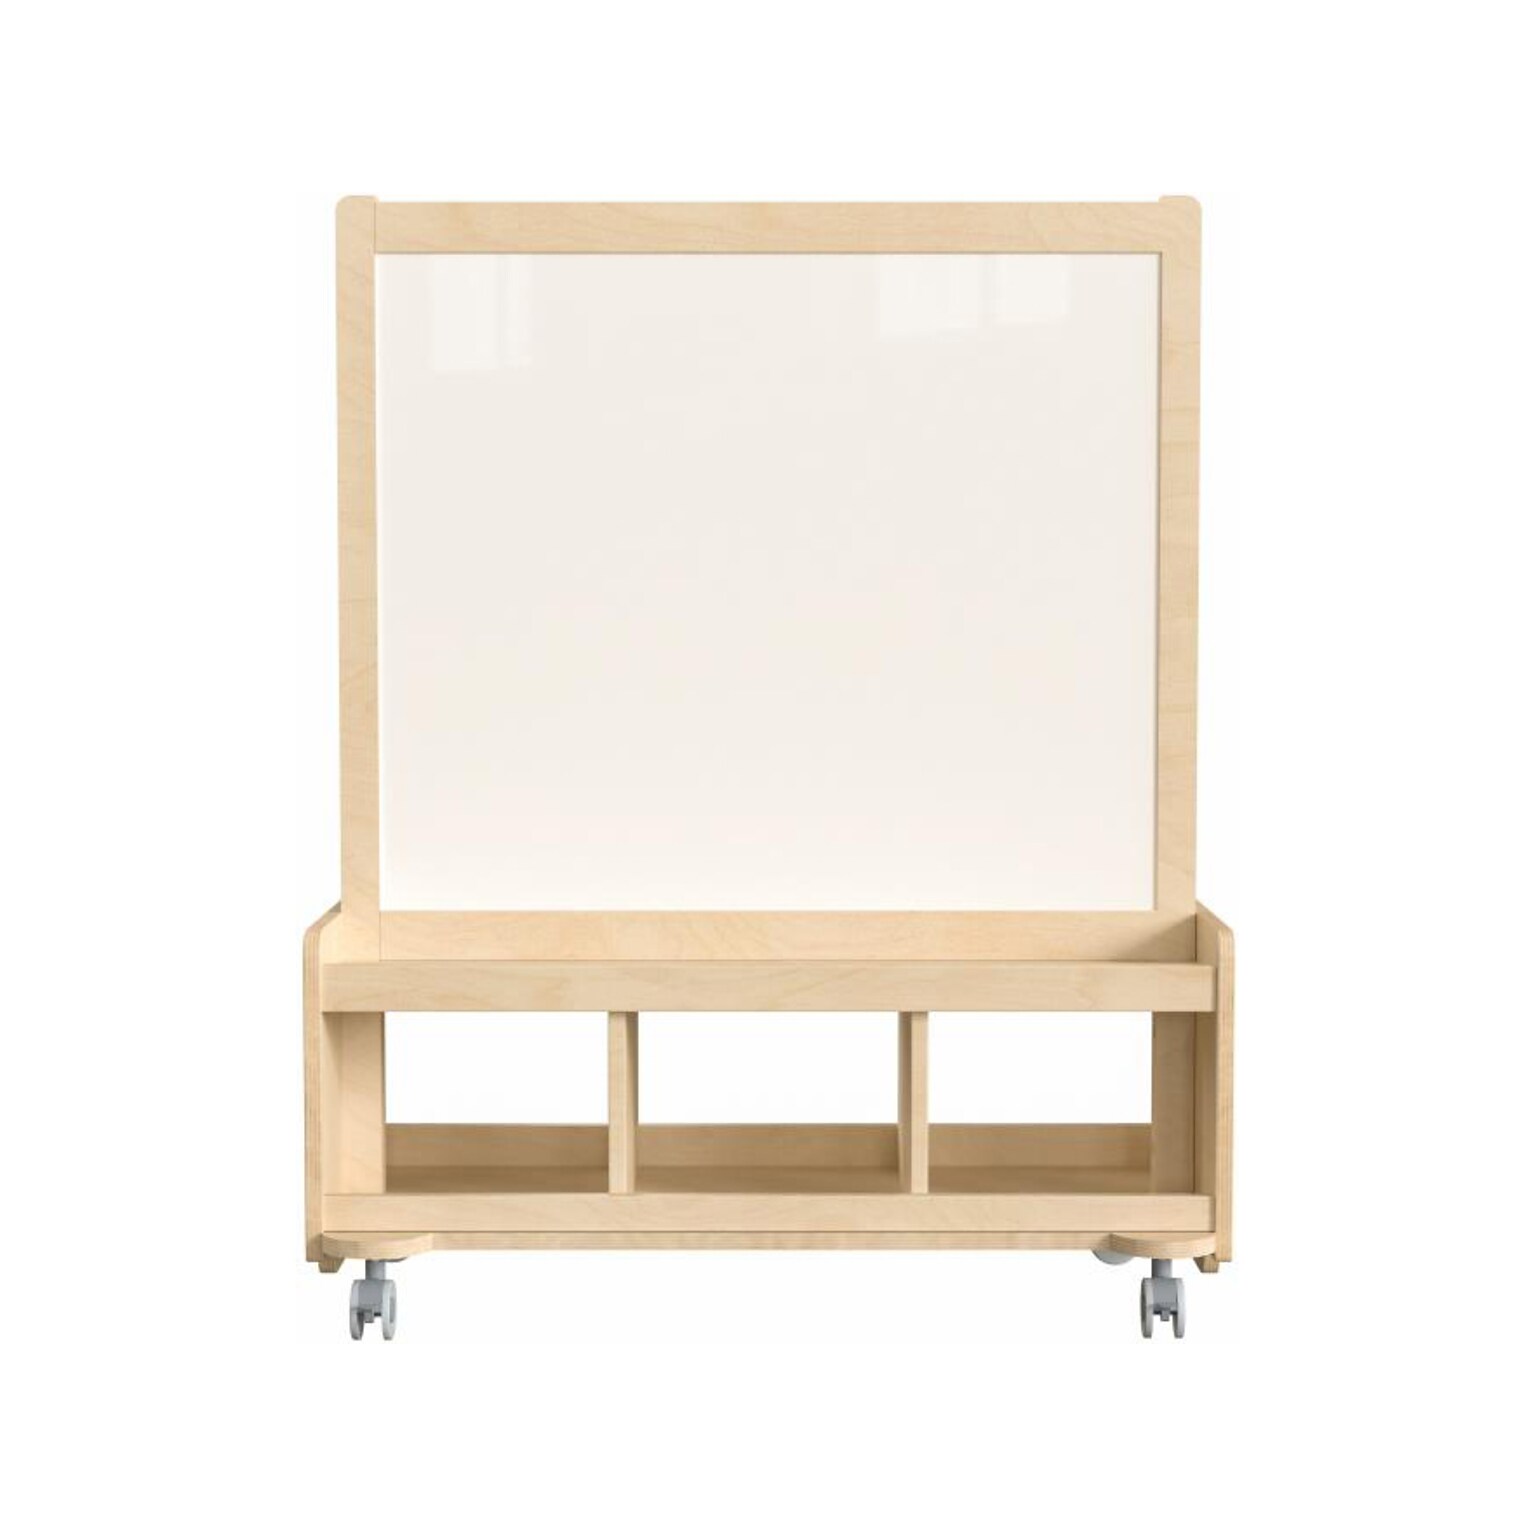 Flash Furniture Bright Beginnings 2-Person Art Station, 39.5, Brown Birch Plywood (MK-ME09050-GG)